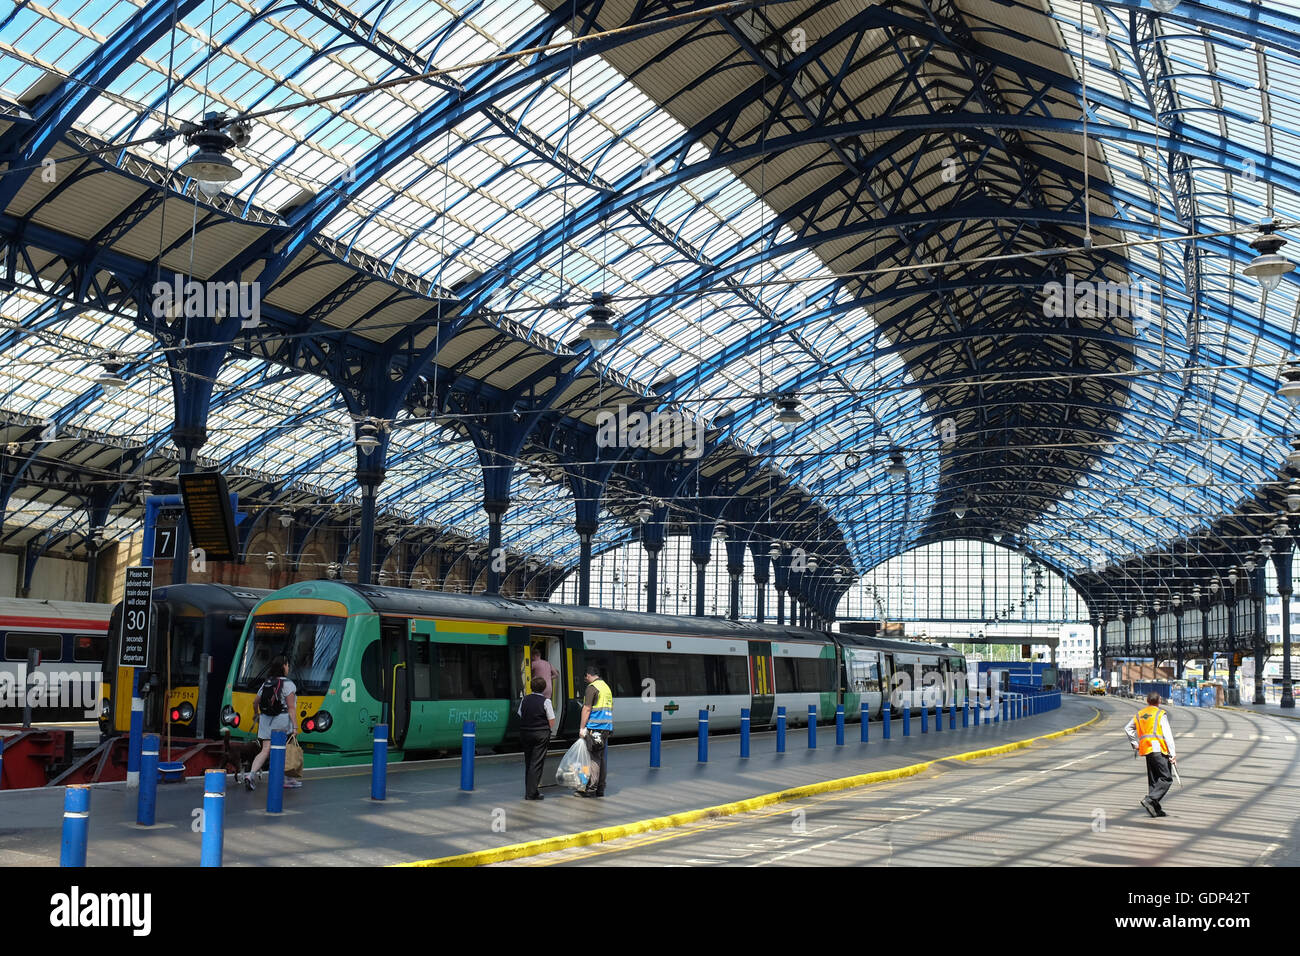 Brighton train station on the south coast of England. Stock Photo